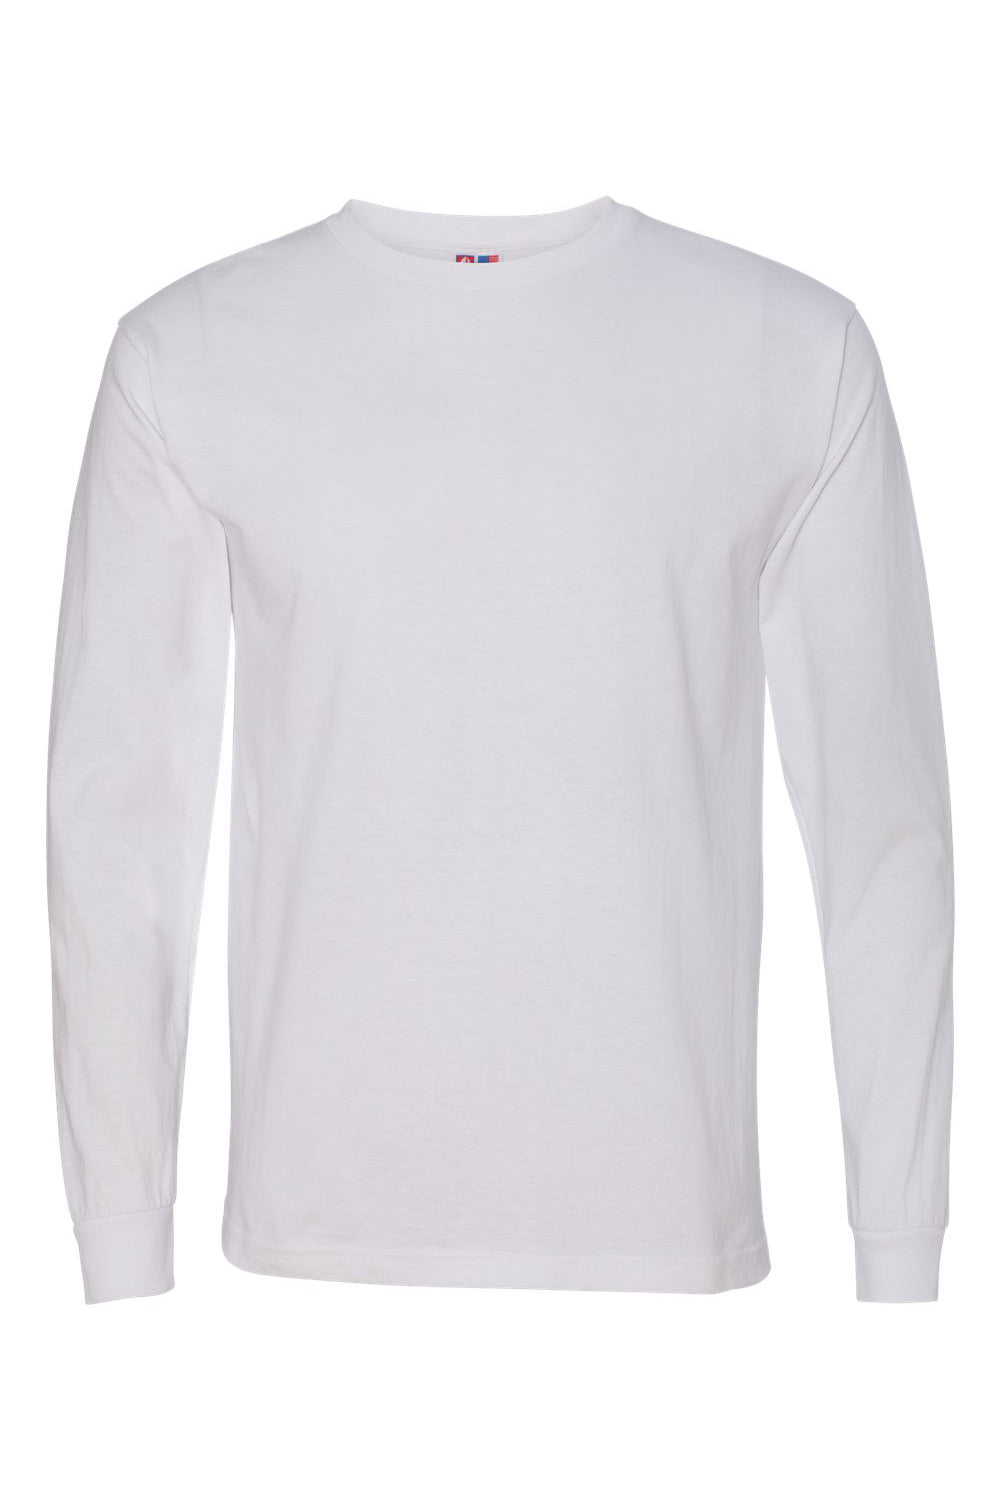 Bayside BA5060 Mens USA Made Long Sleeve Crewneck T-Shirt White Flat Front